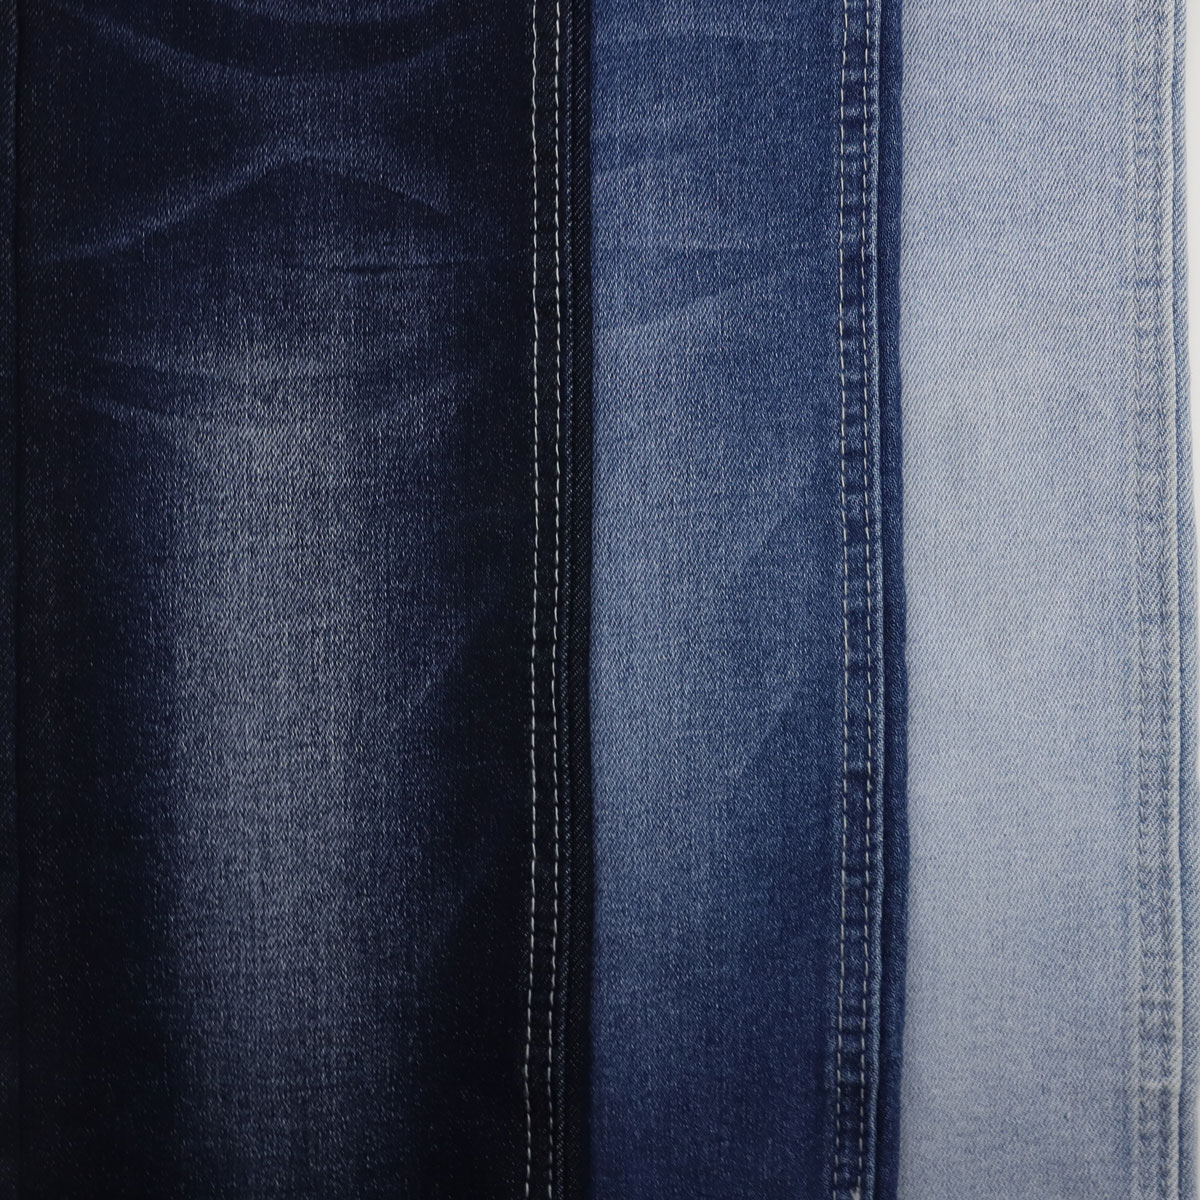 247a-3 12oz manufacturer wholesale indigo high stretch denim fabric for women jeans/shorts